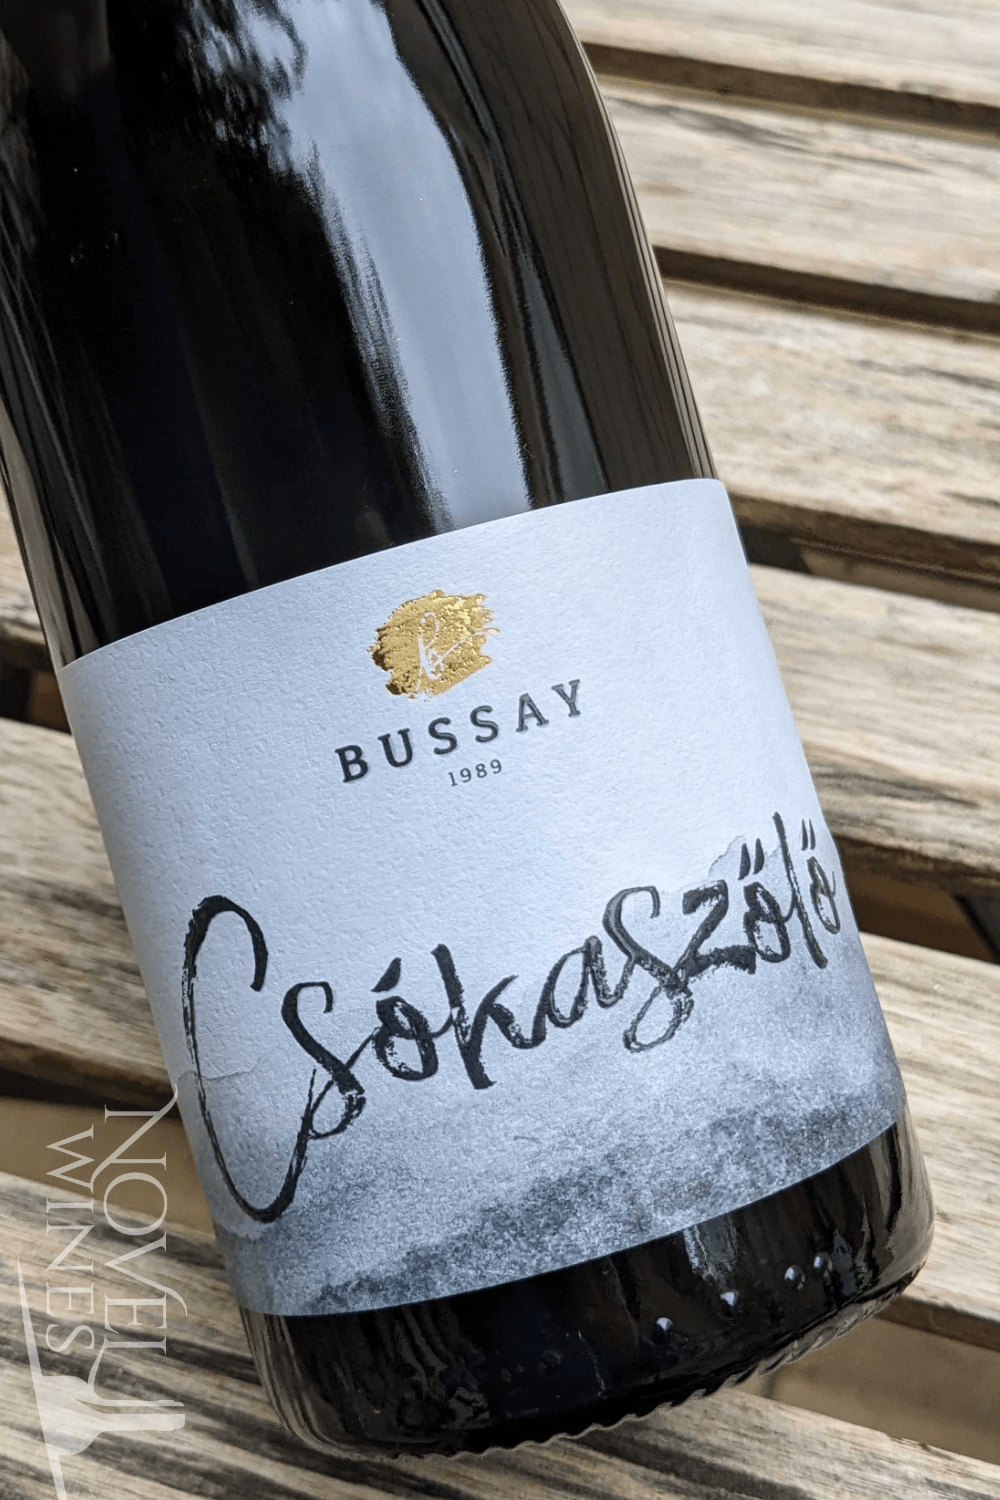 Bussay Red Wine Bussay Csokaszolo 2020, Hungary